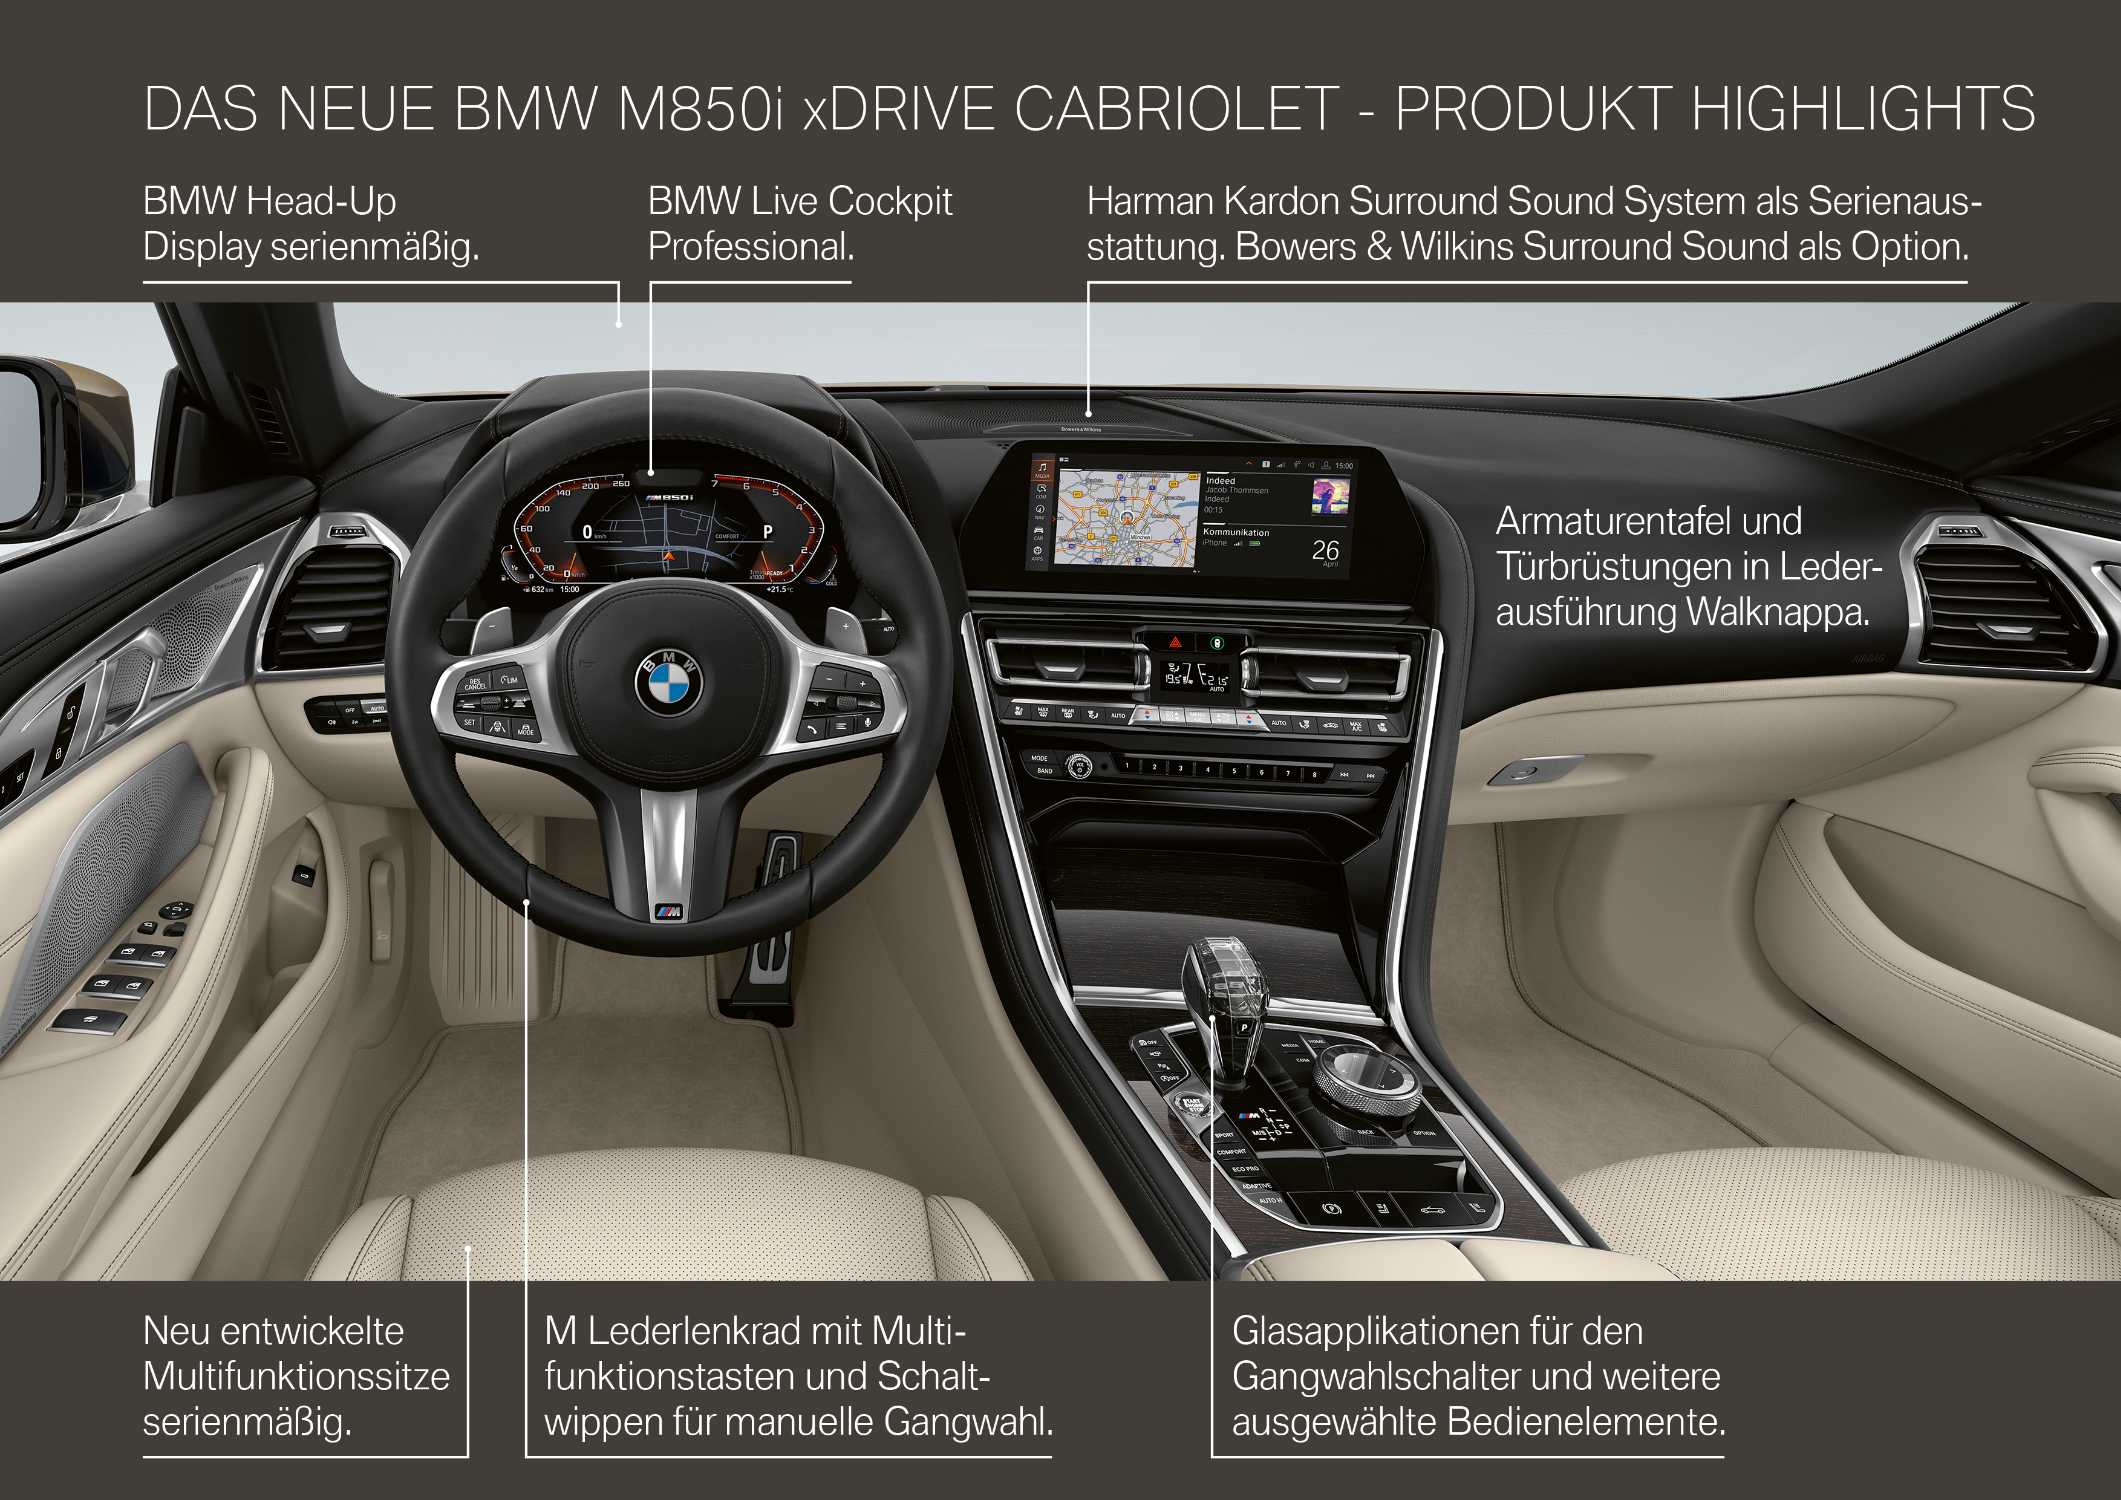 Das neue BMW 8er Cabriolet (11/2018).